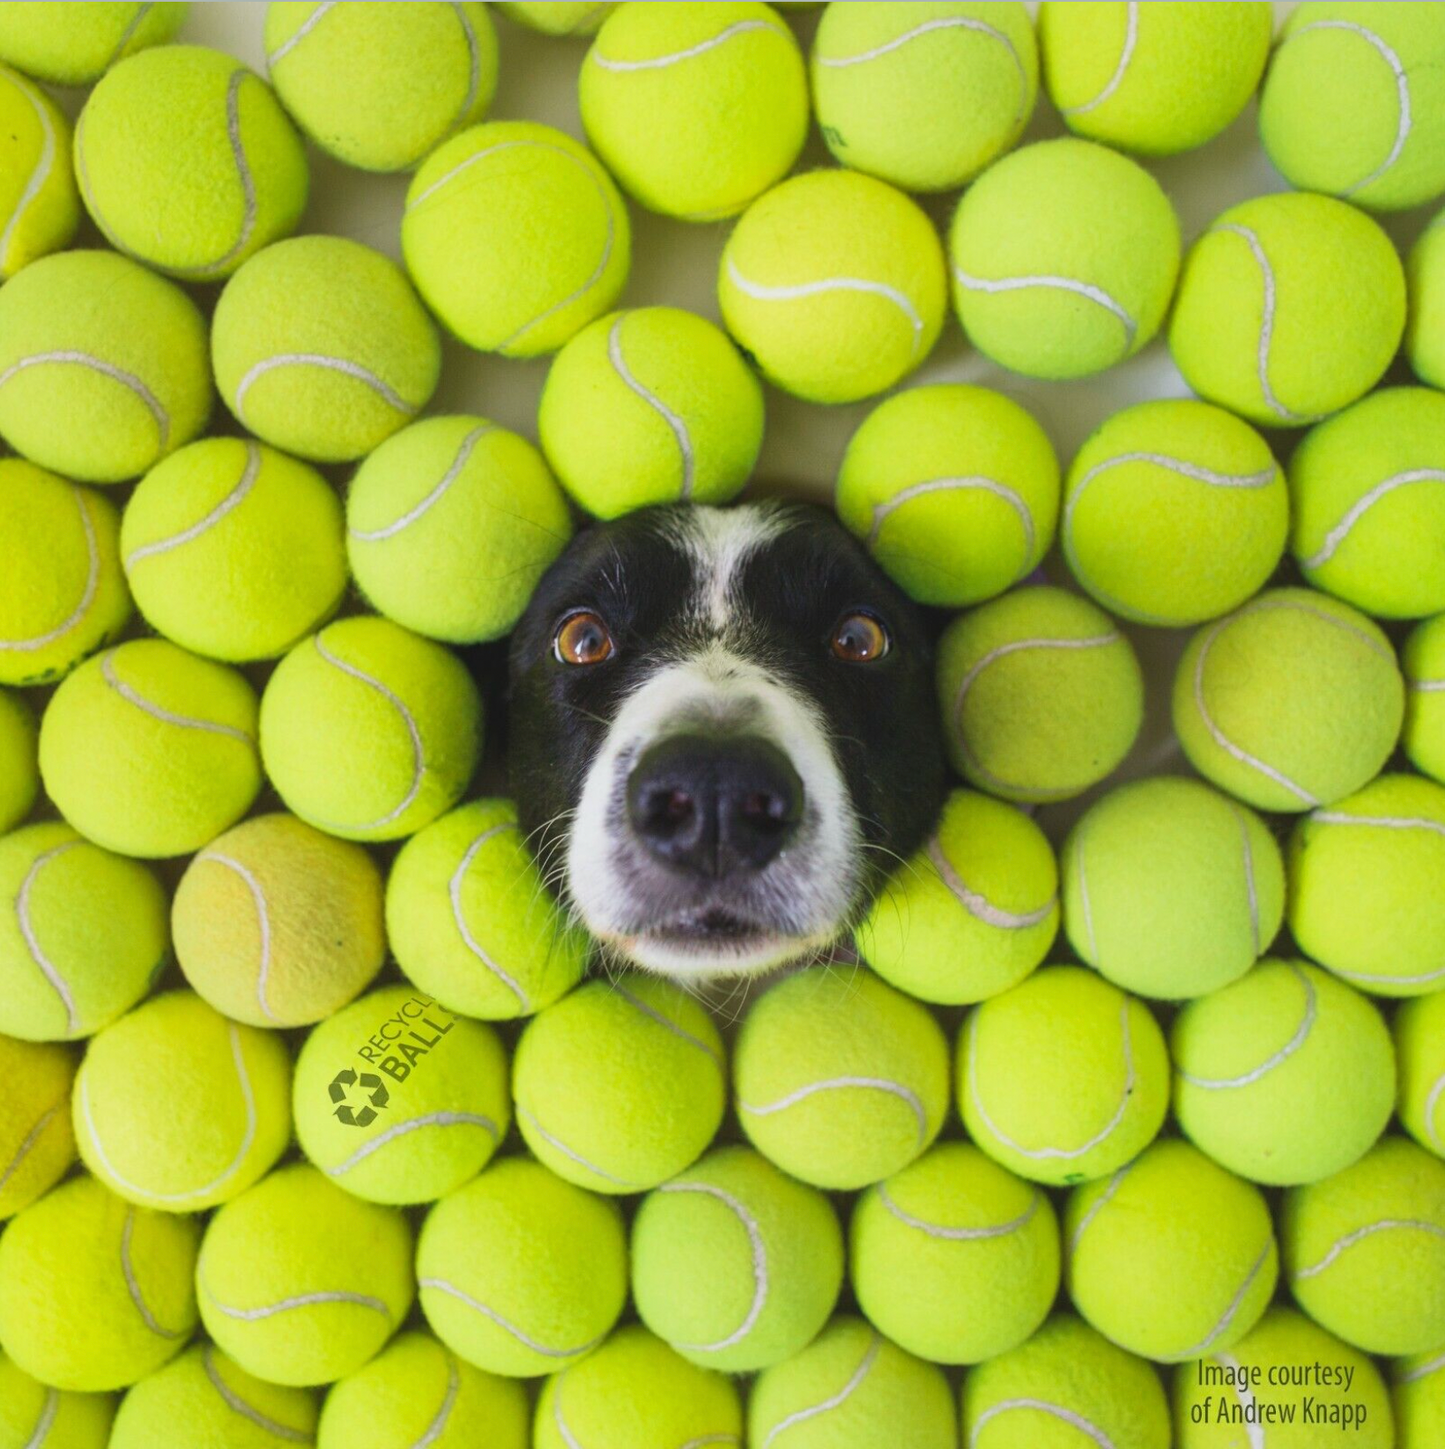 Retired Tennis Ball